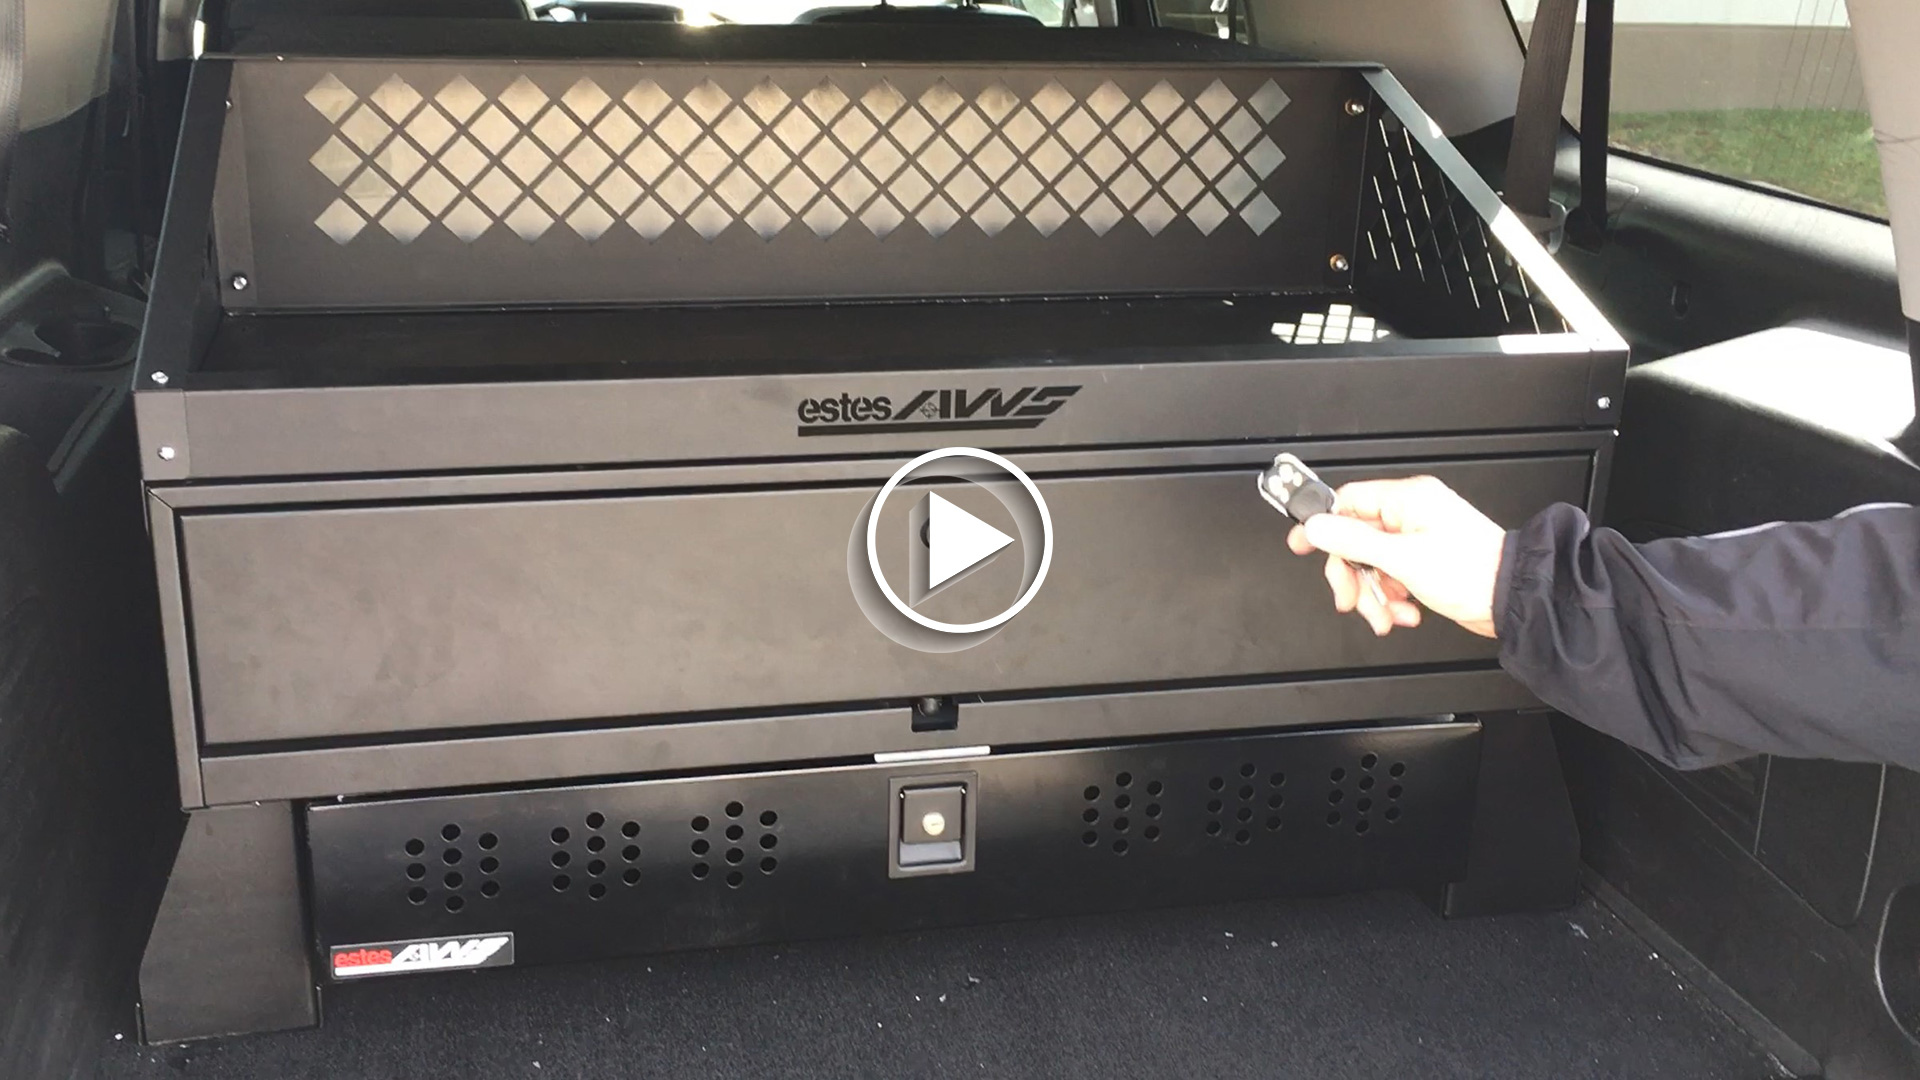 Remote vehicle trunk gun storage for police